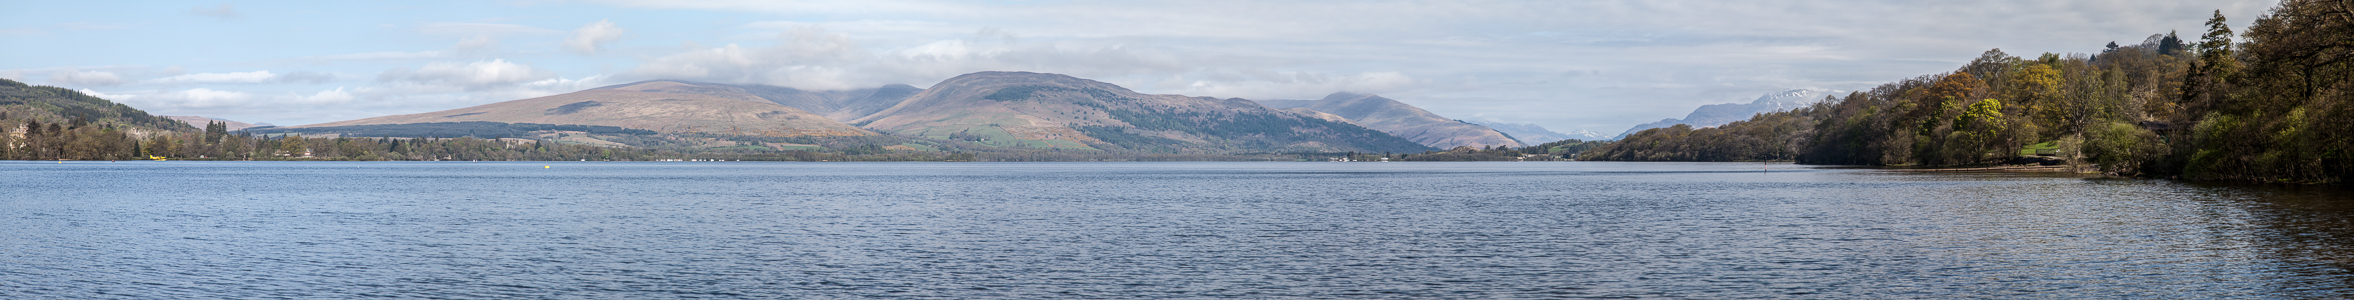 Balloch Loch Lomond and The Trossachs National Park: Loch Lomond